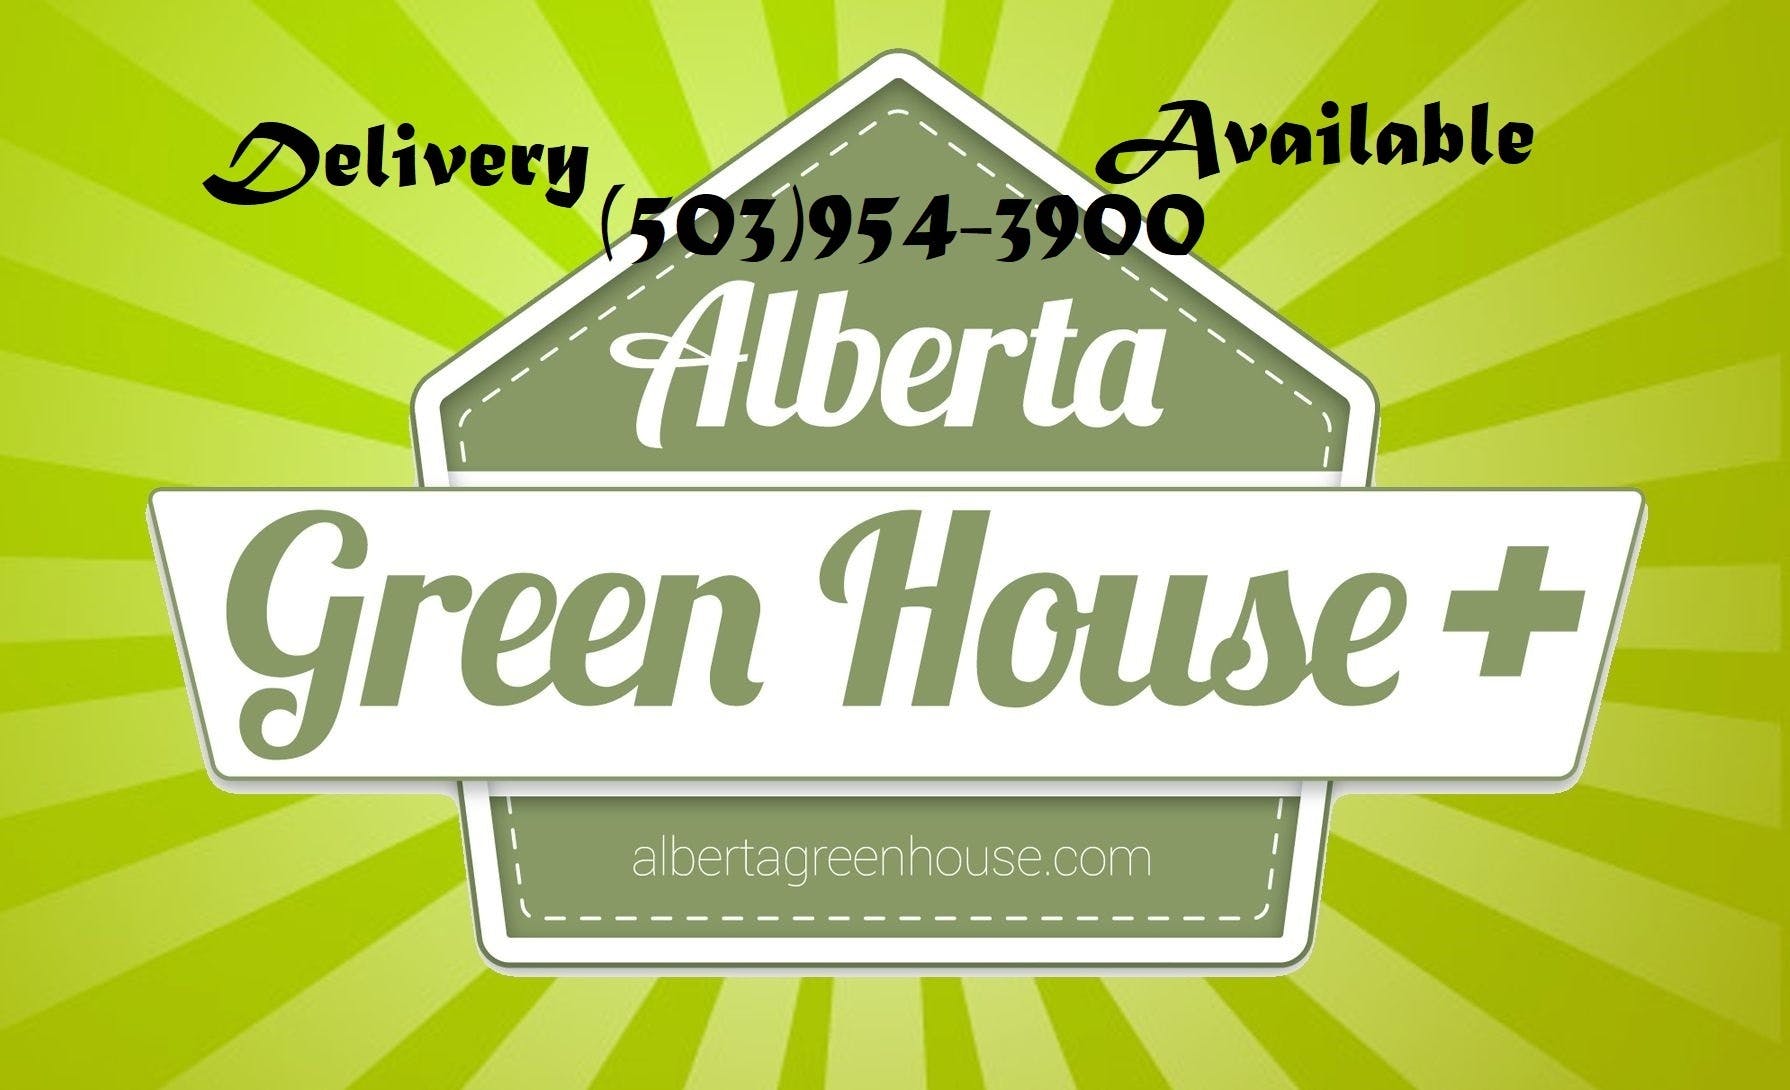 Alberta Green House - Medical Marijuana Doctors - Cannabizme.com